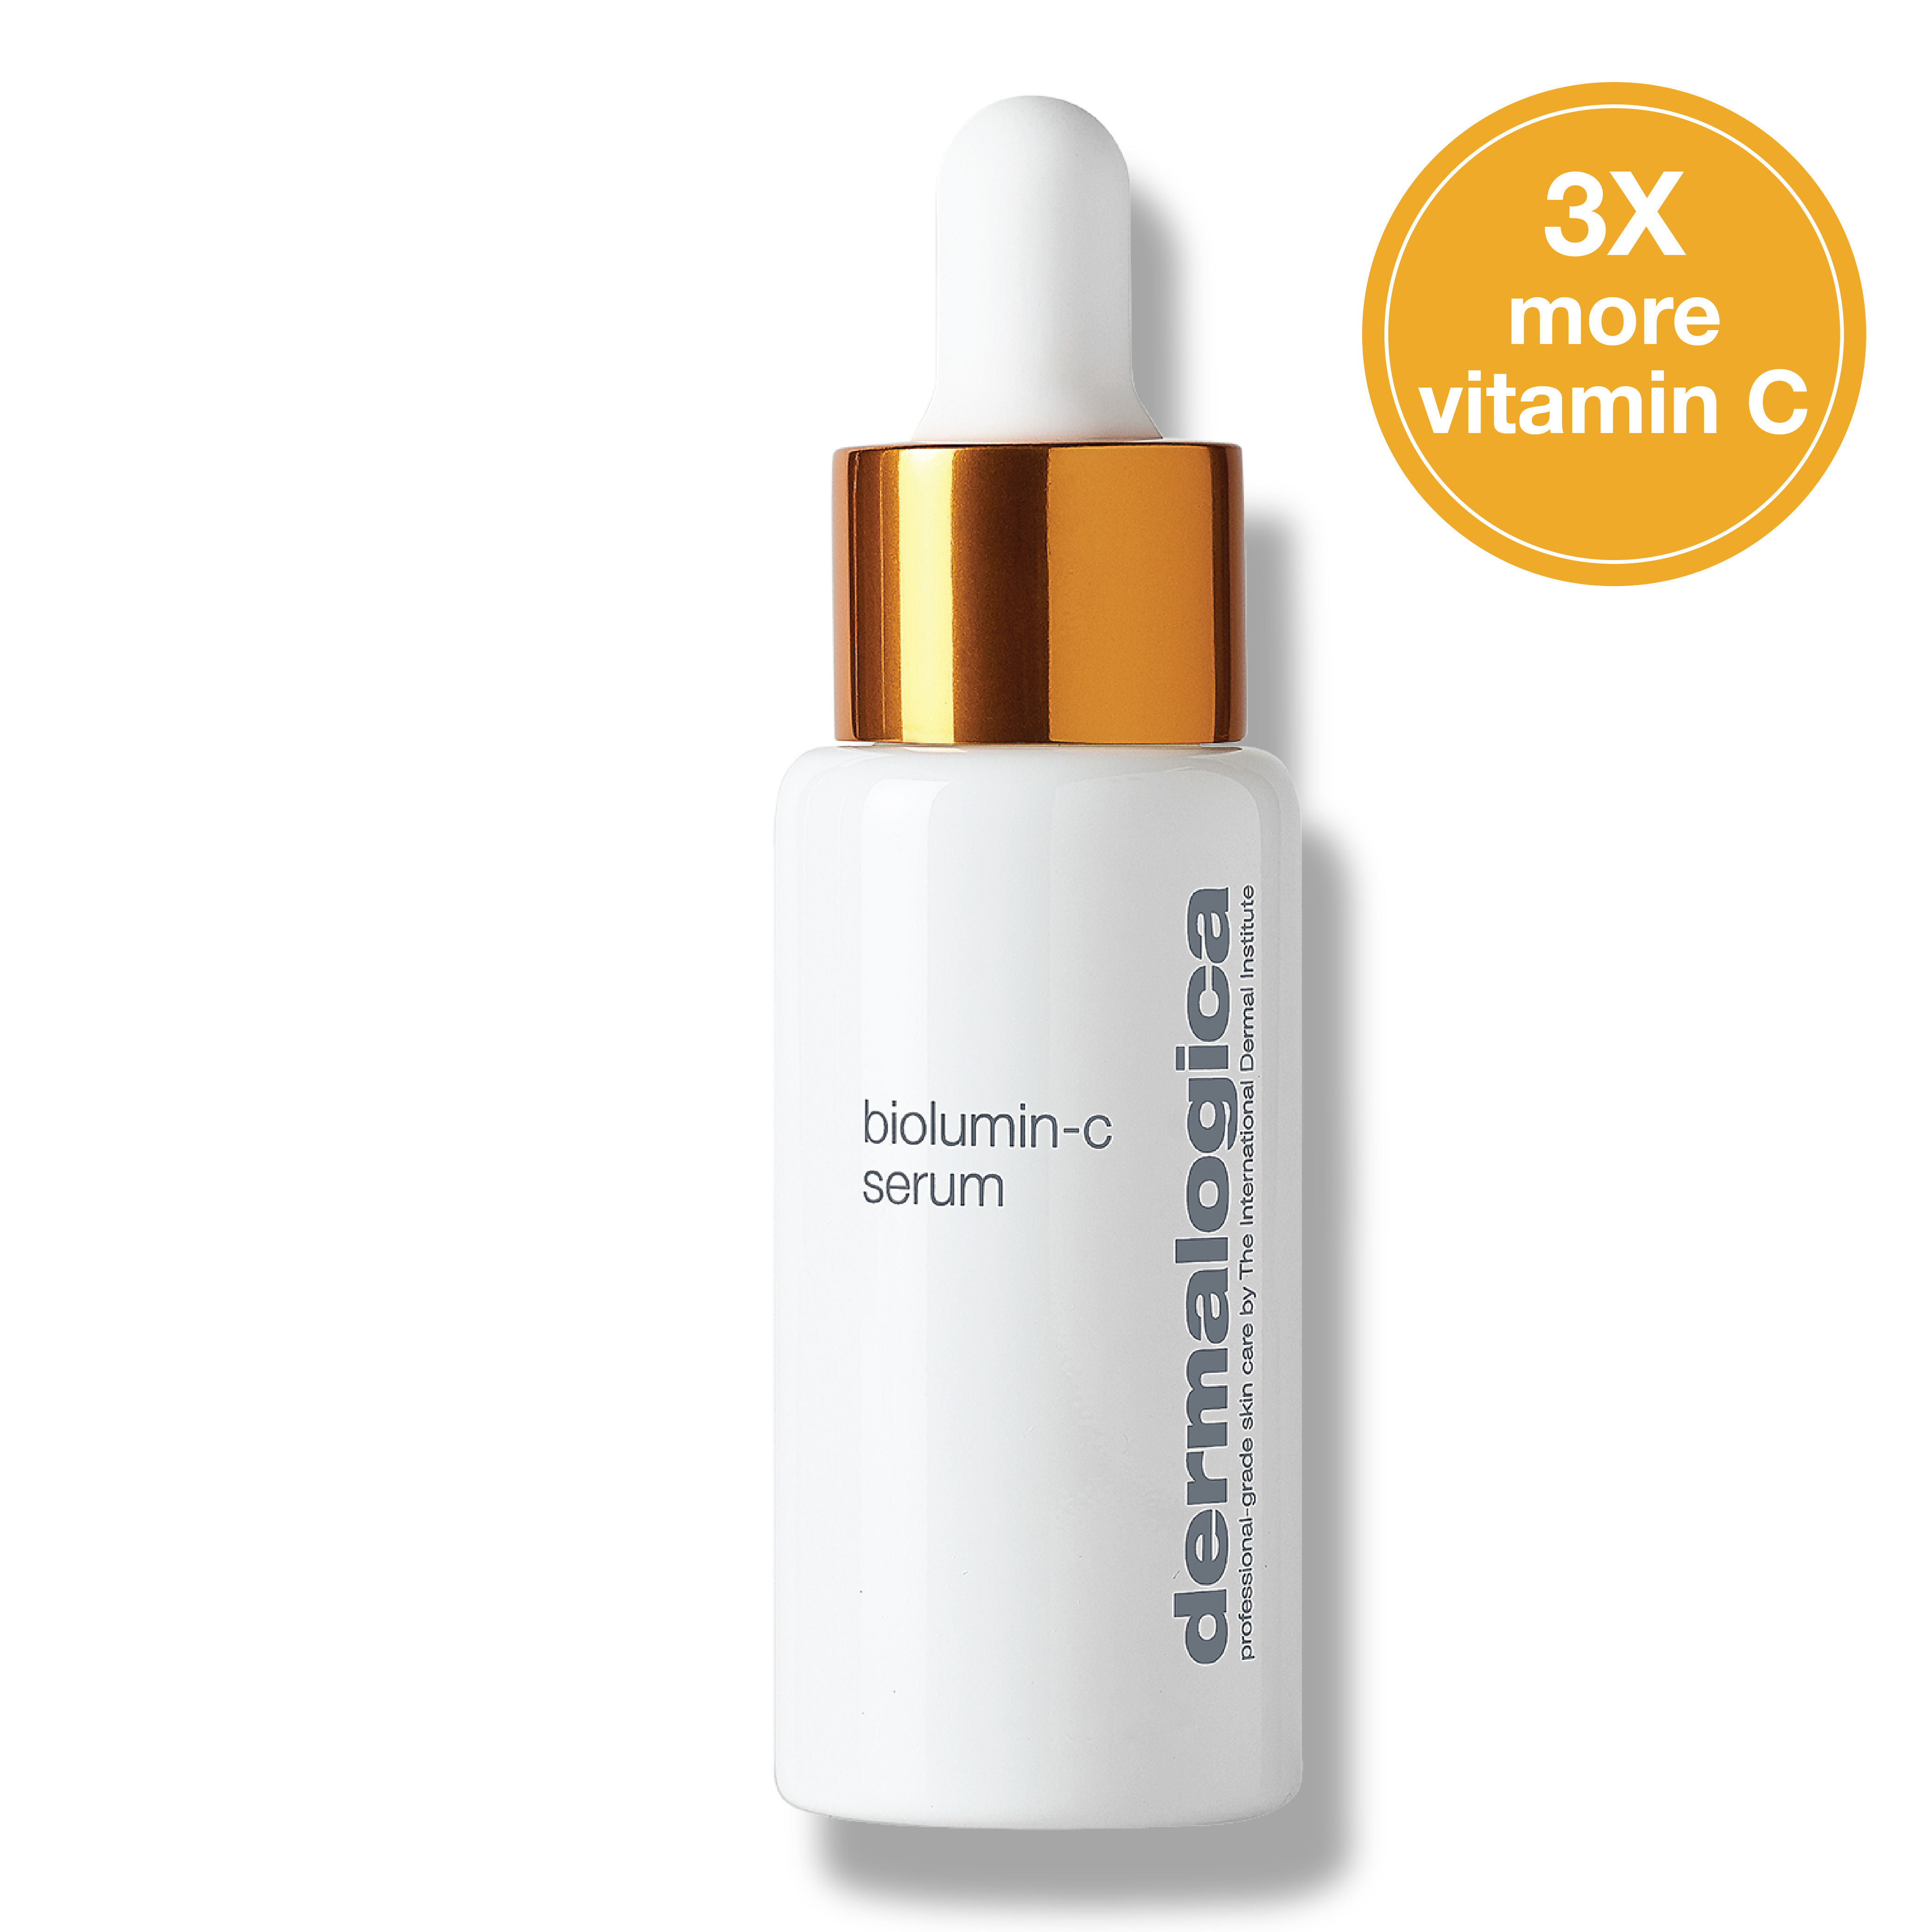 Dermalogica Biolumin-C Serum Brightening Vitamin C Serum With Lactic Acid & Chia Seed Oil